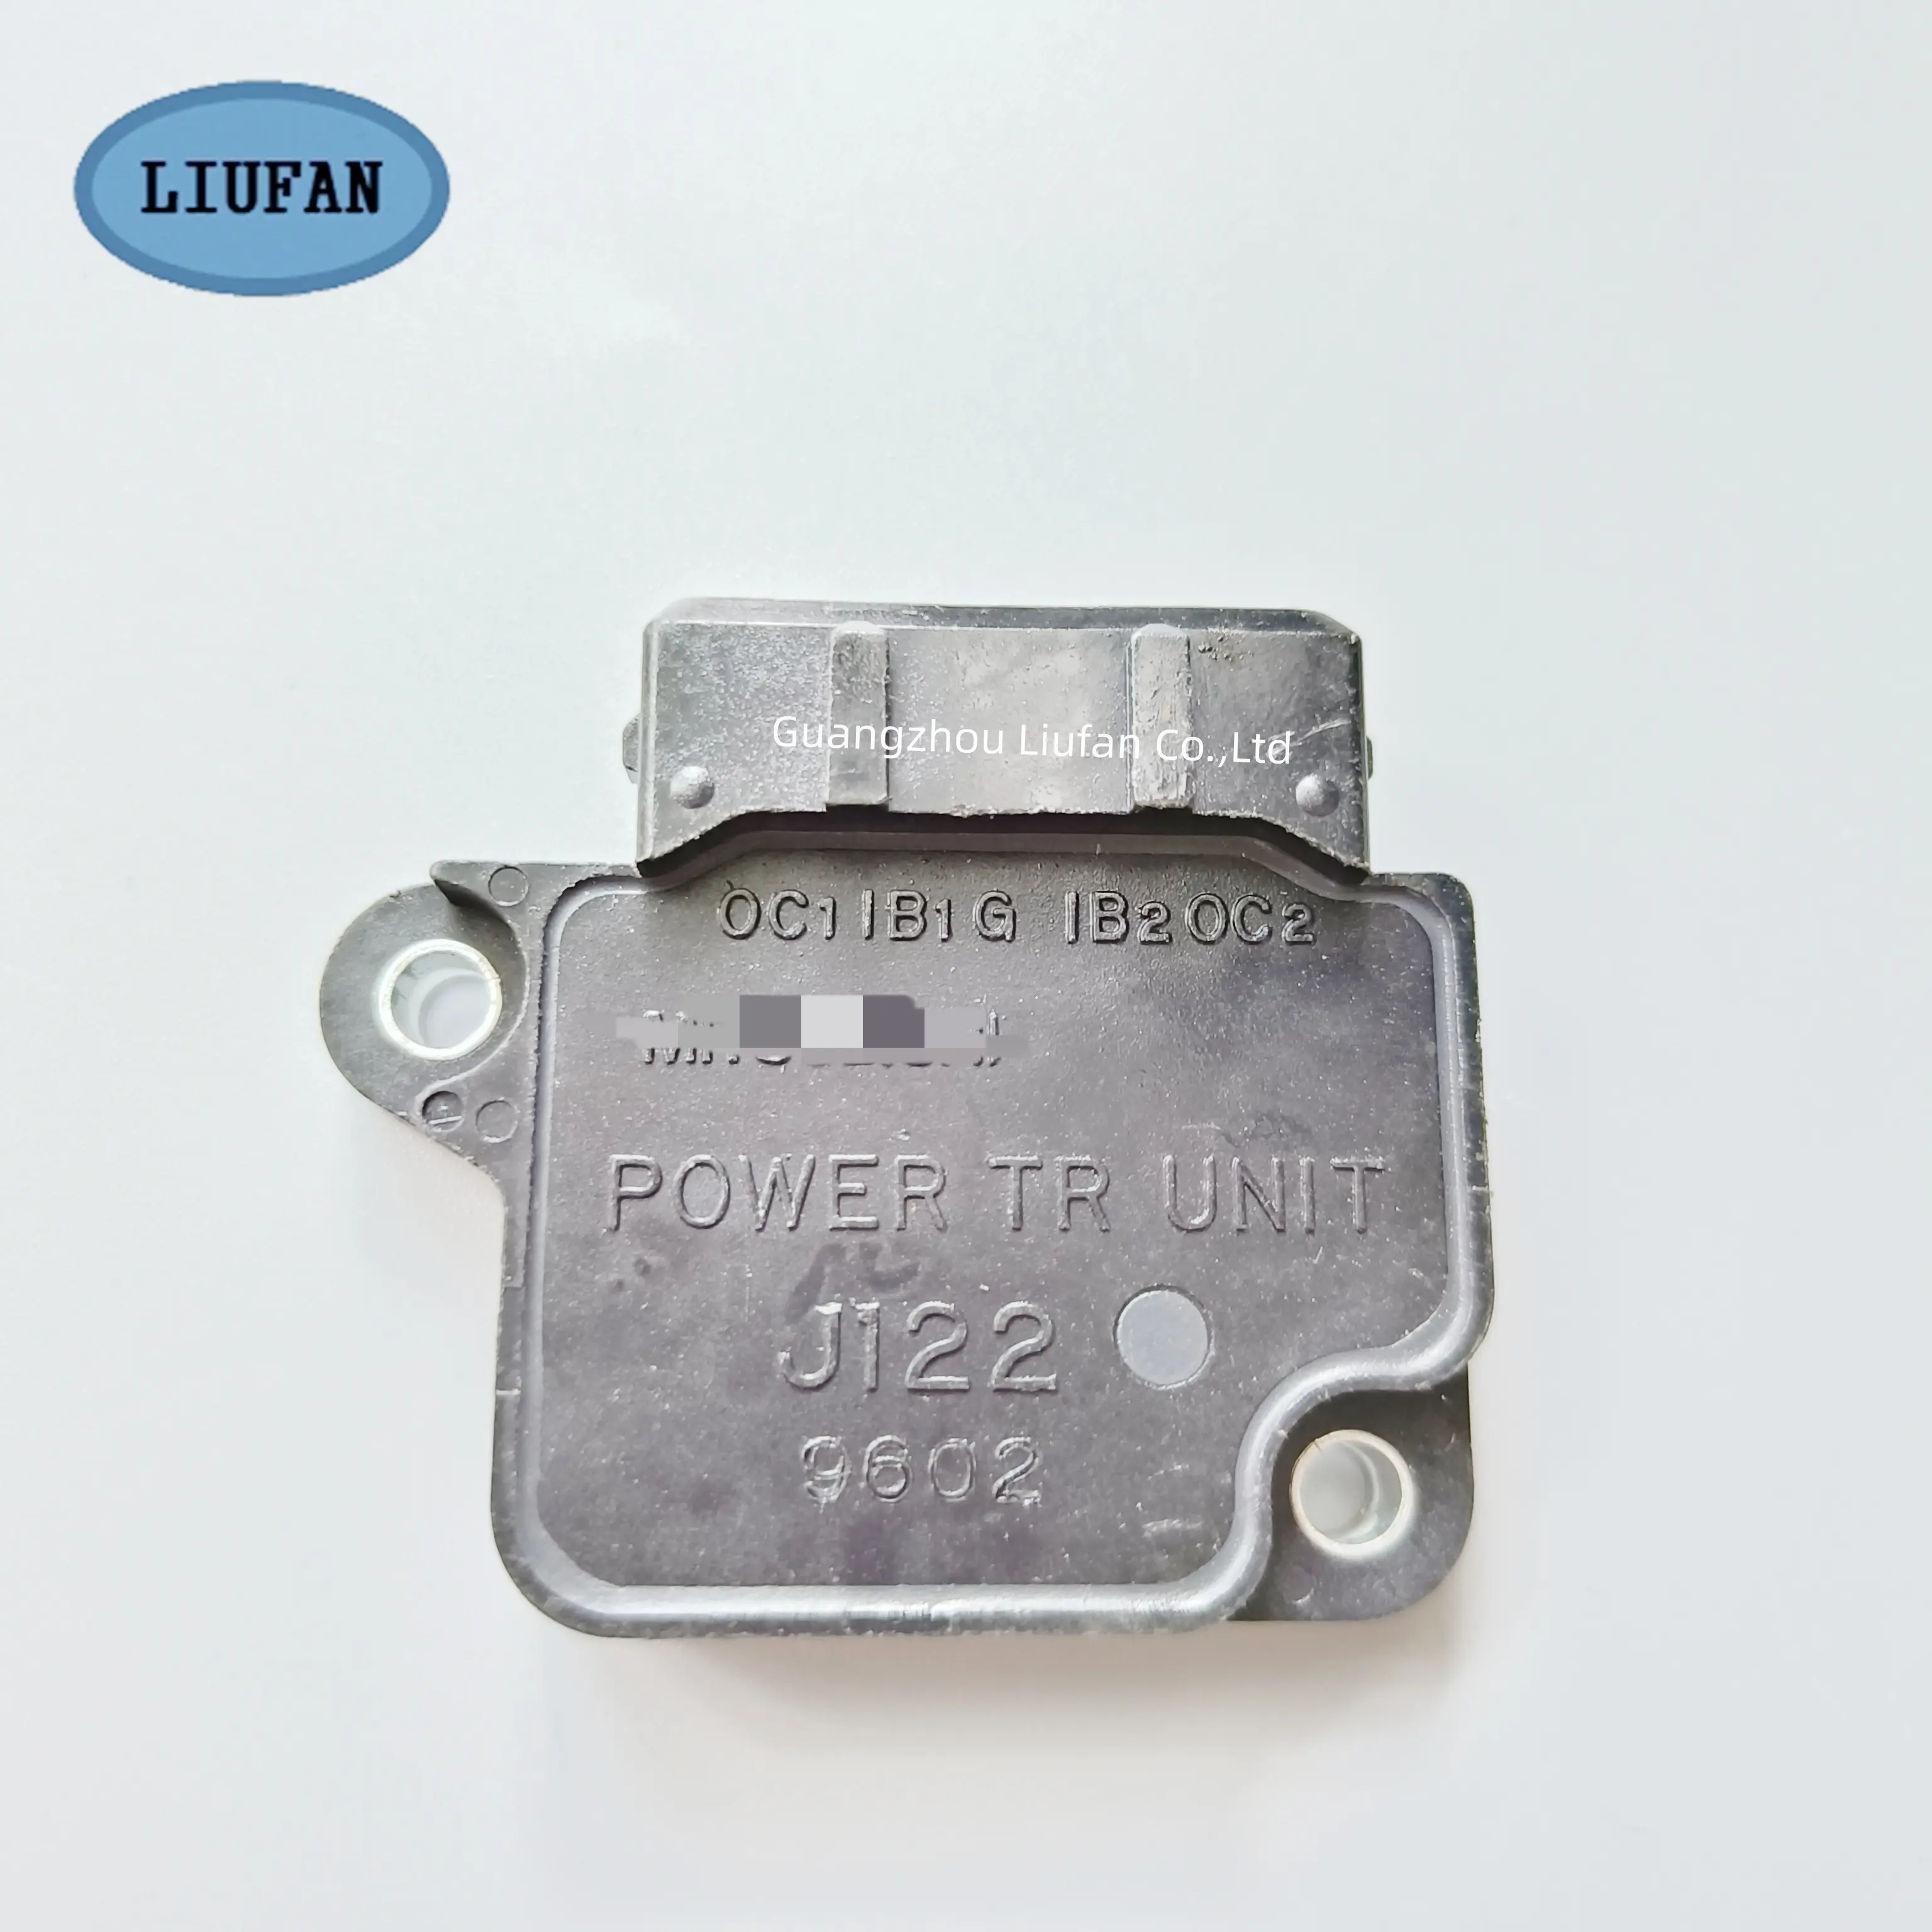 LIUFAN Ignition coil module MD127742 J122 ignition control module transistor ignition power fit for Mitsubi-shi Eclipse